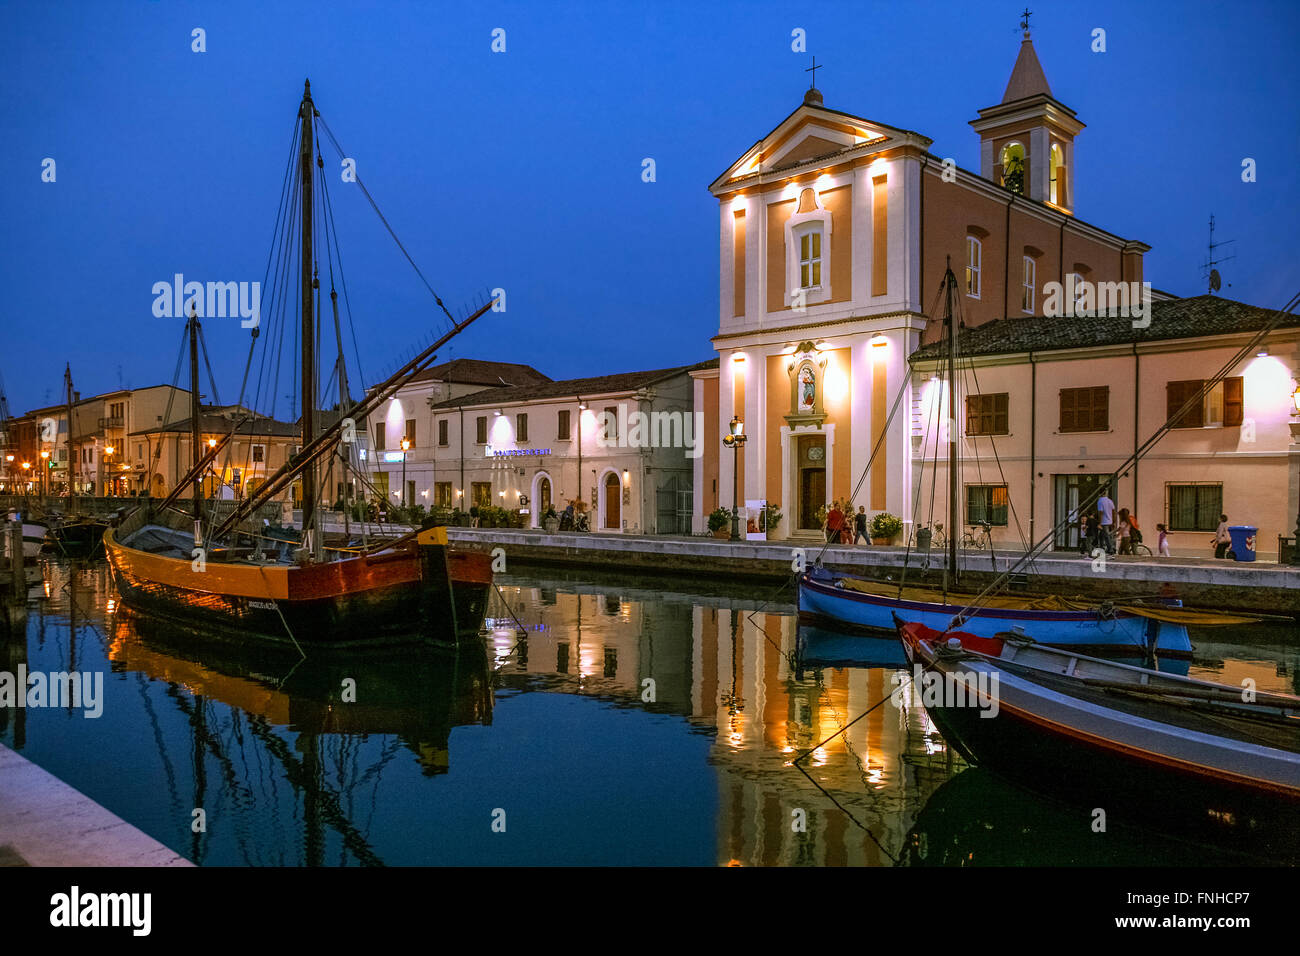 Porto canale leonardesco hi-res stock photography and images - Alamy